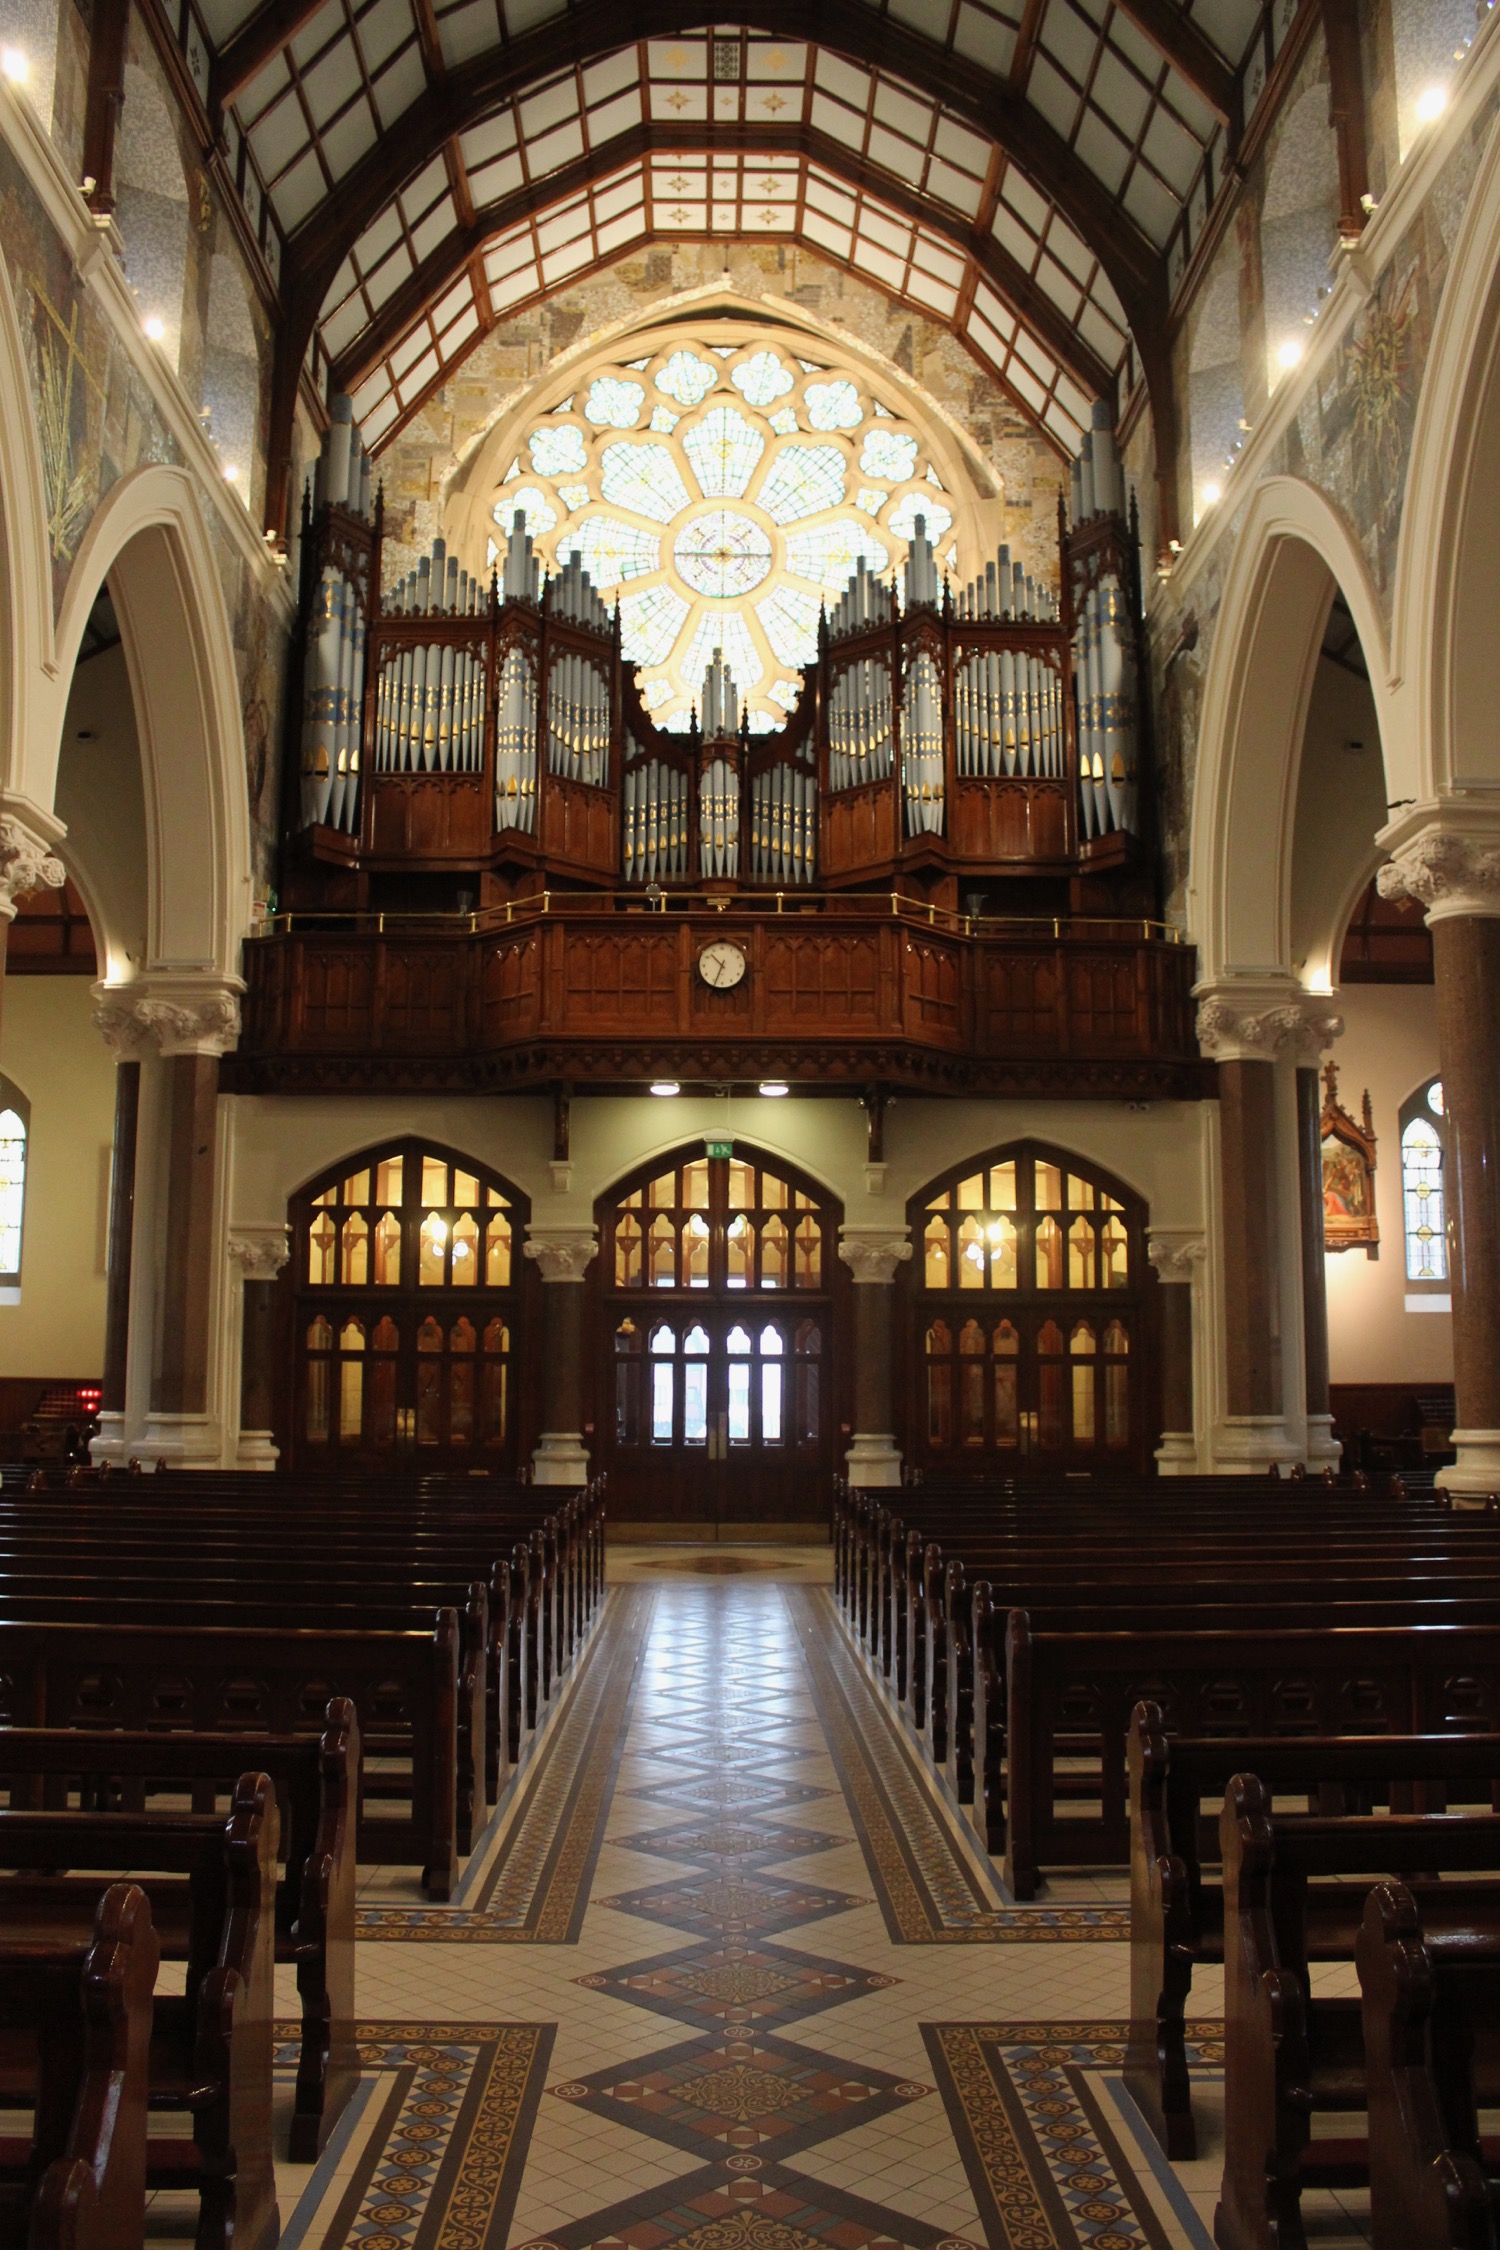 a church with a large organ